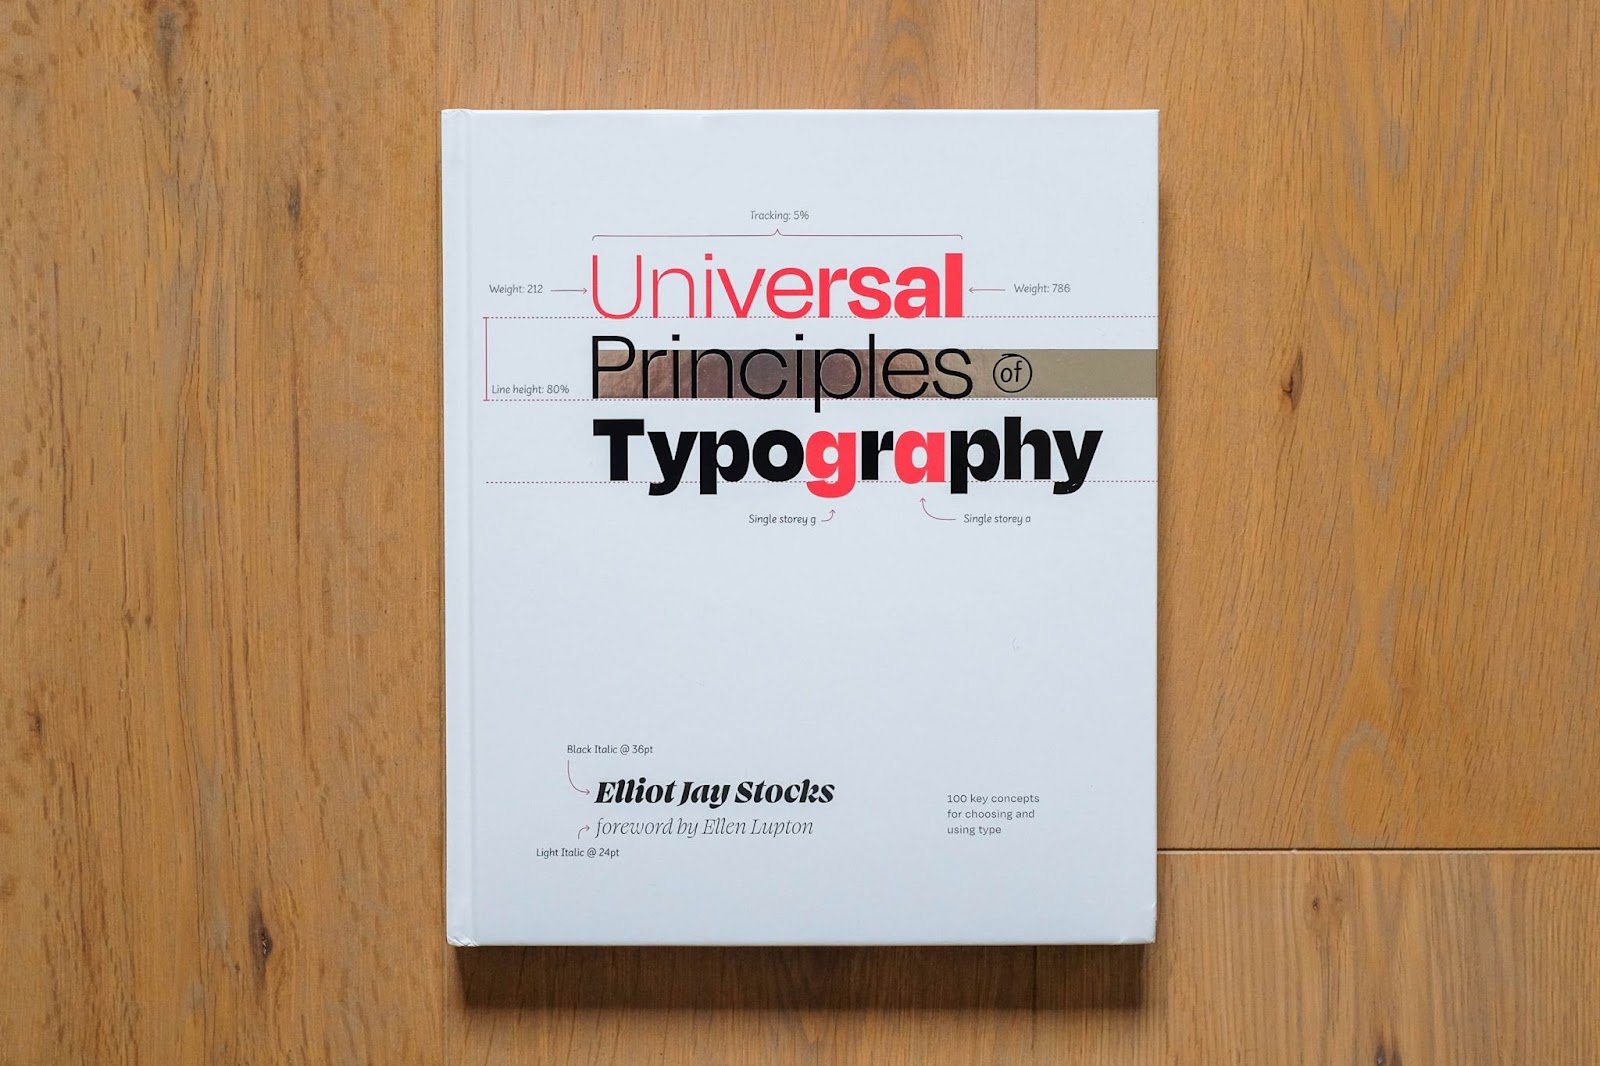 Bookshelf Essential: Universal Principles of Typography